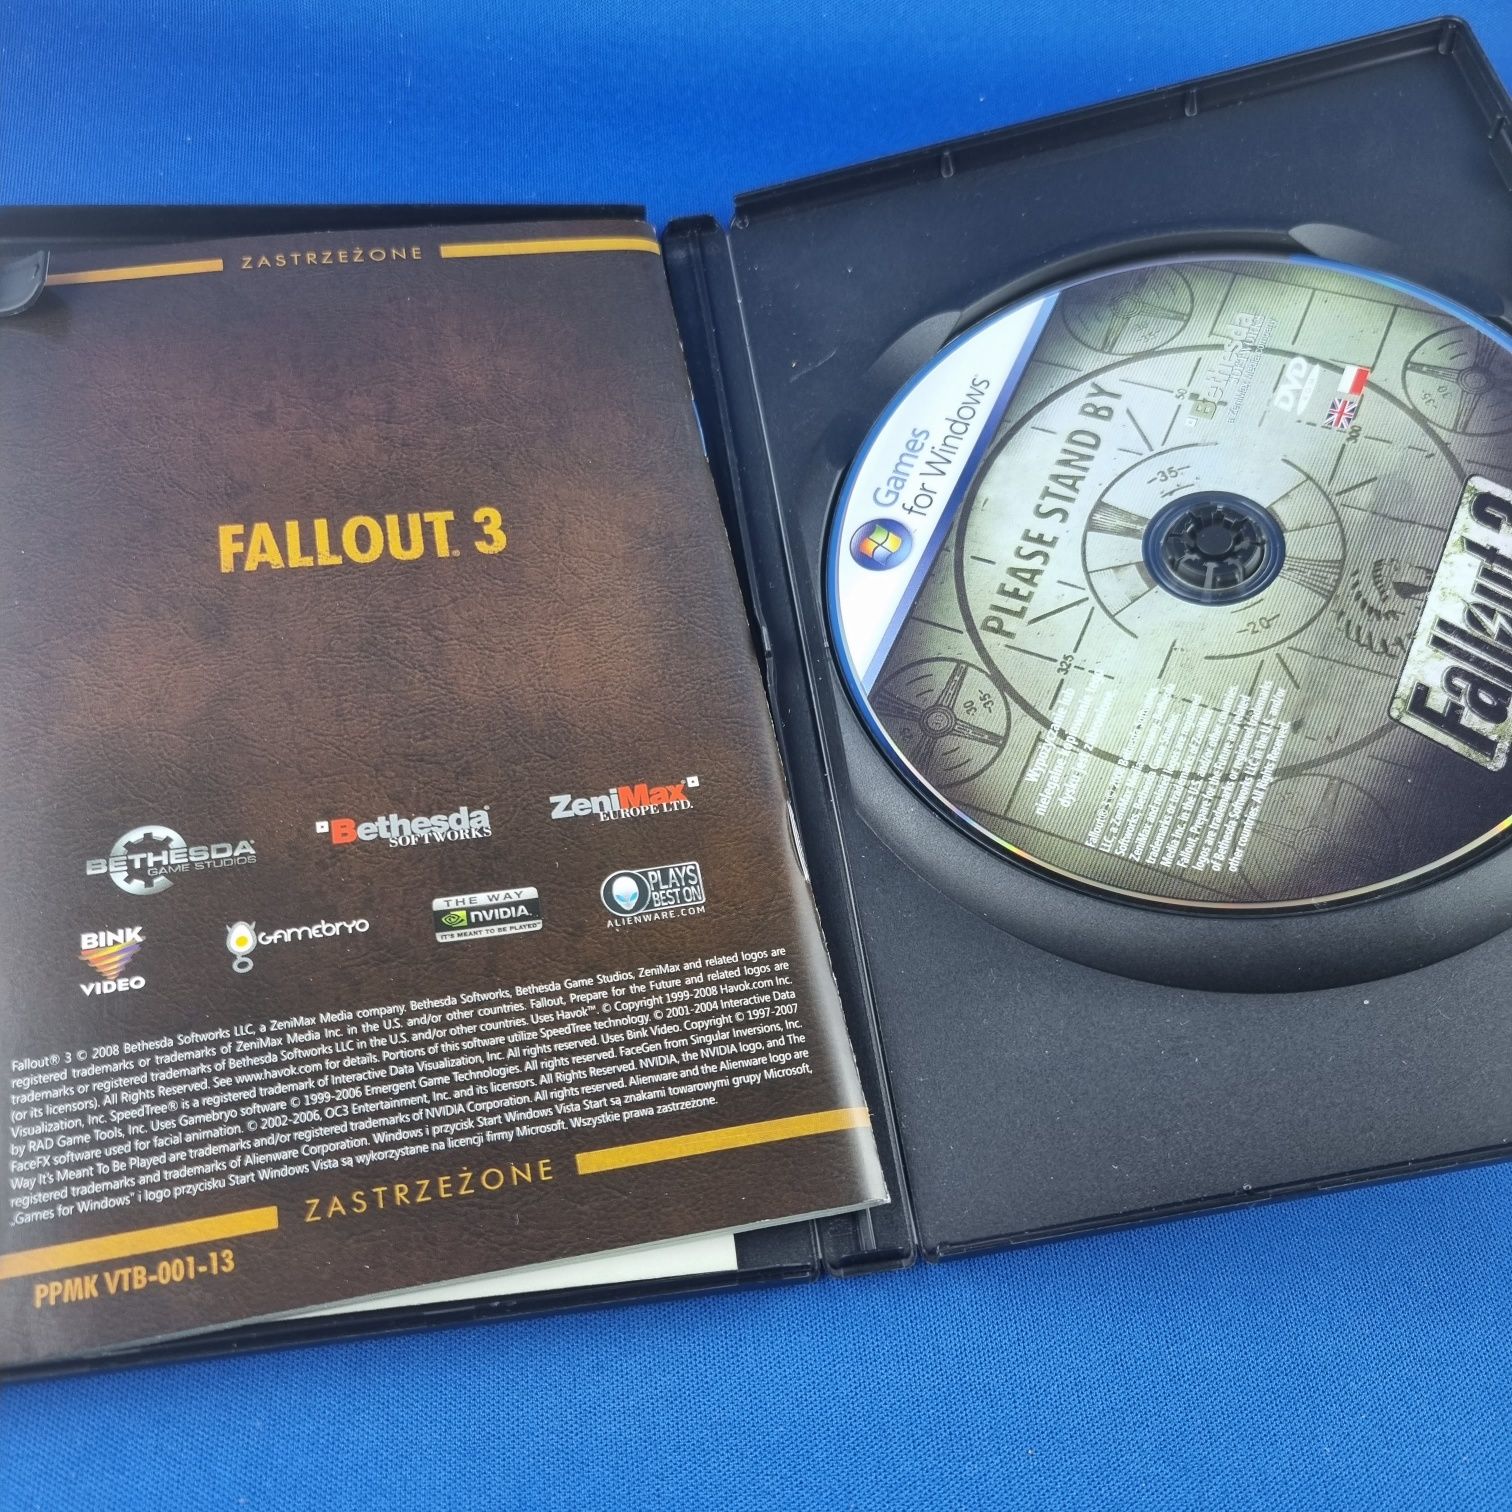 Fallout 3 PC Polska edycja